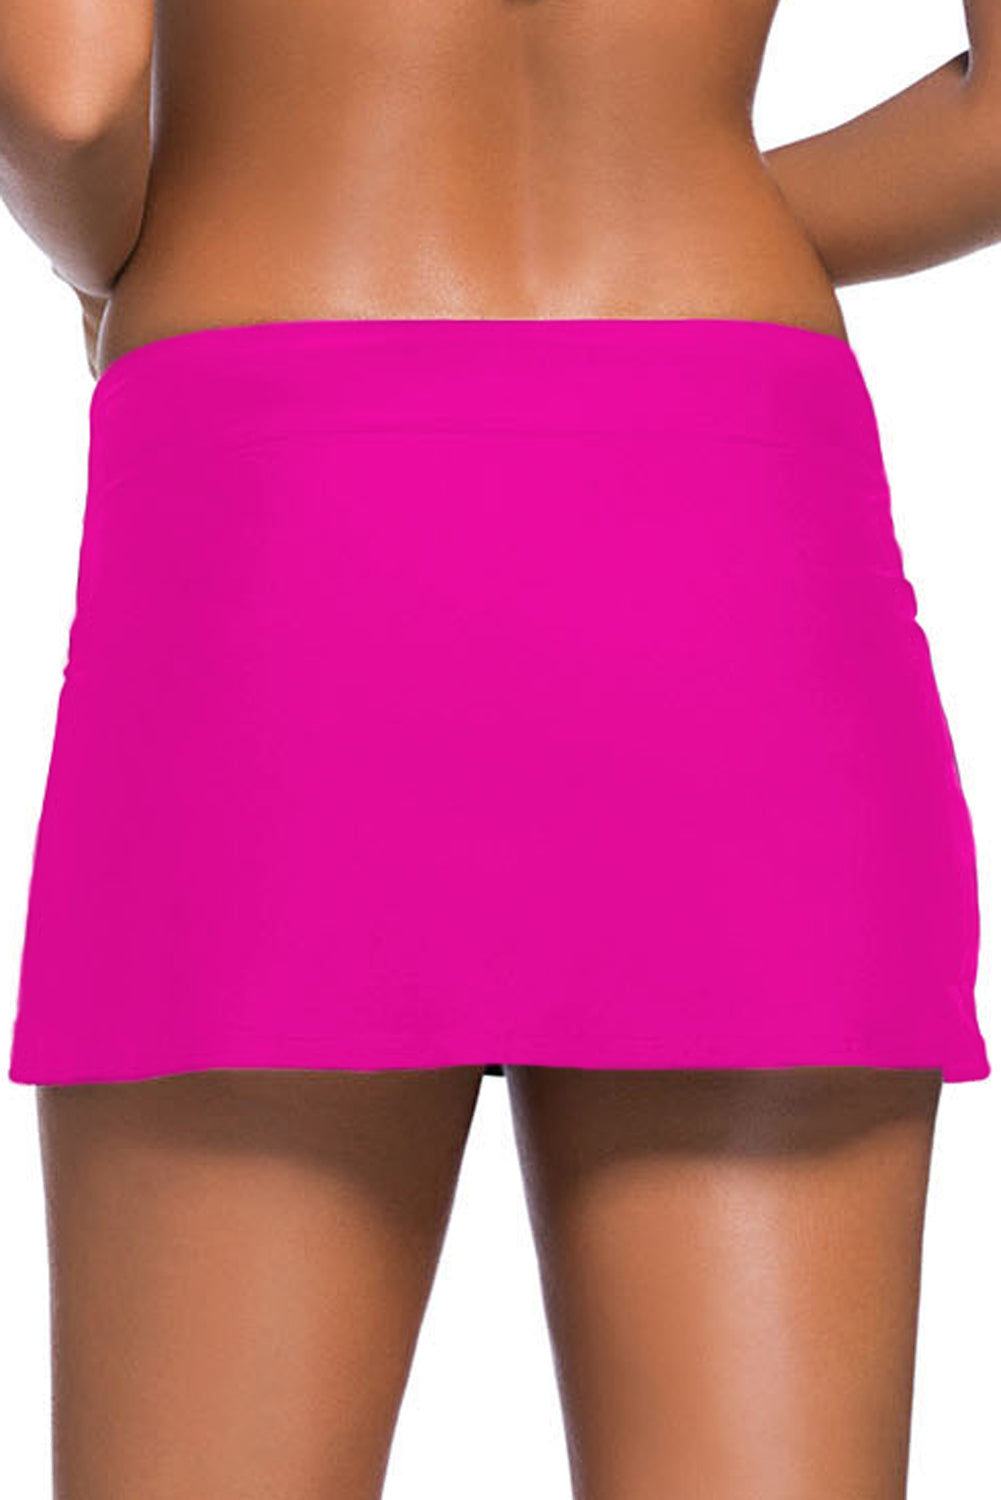 Plus Size Tummy Control Swim Skirt Bathing Suit Bottom for Women